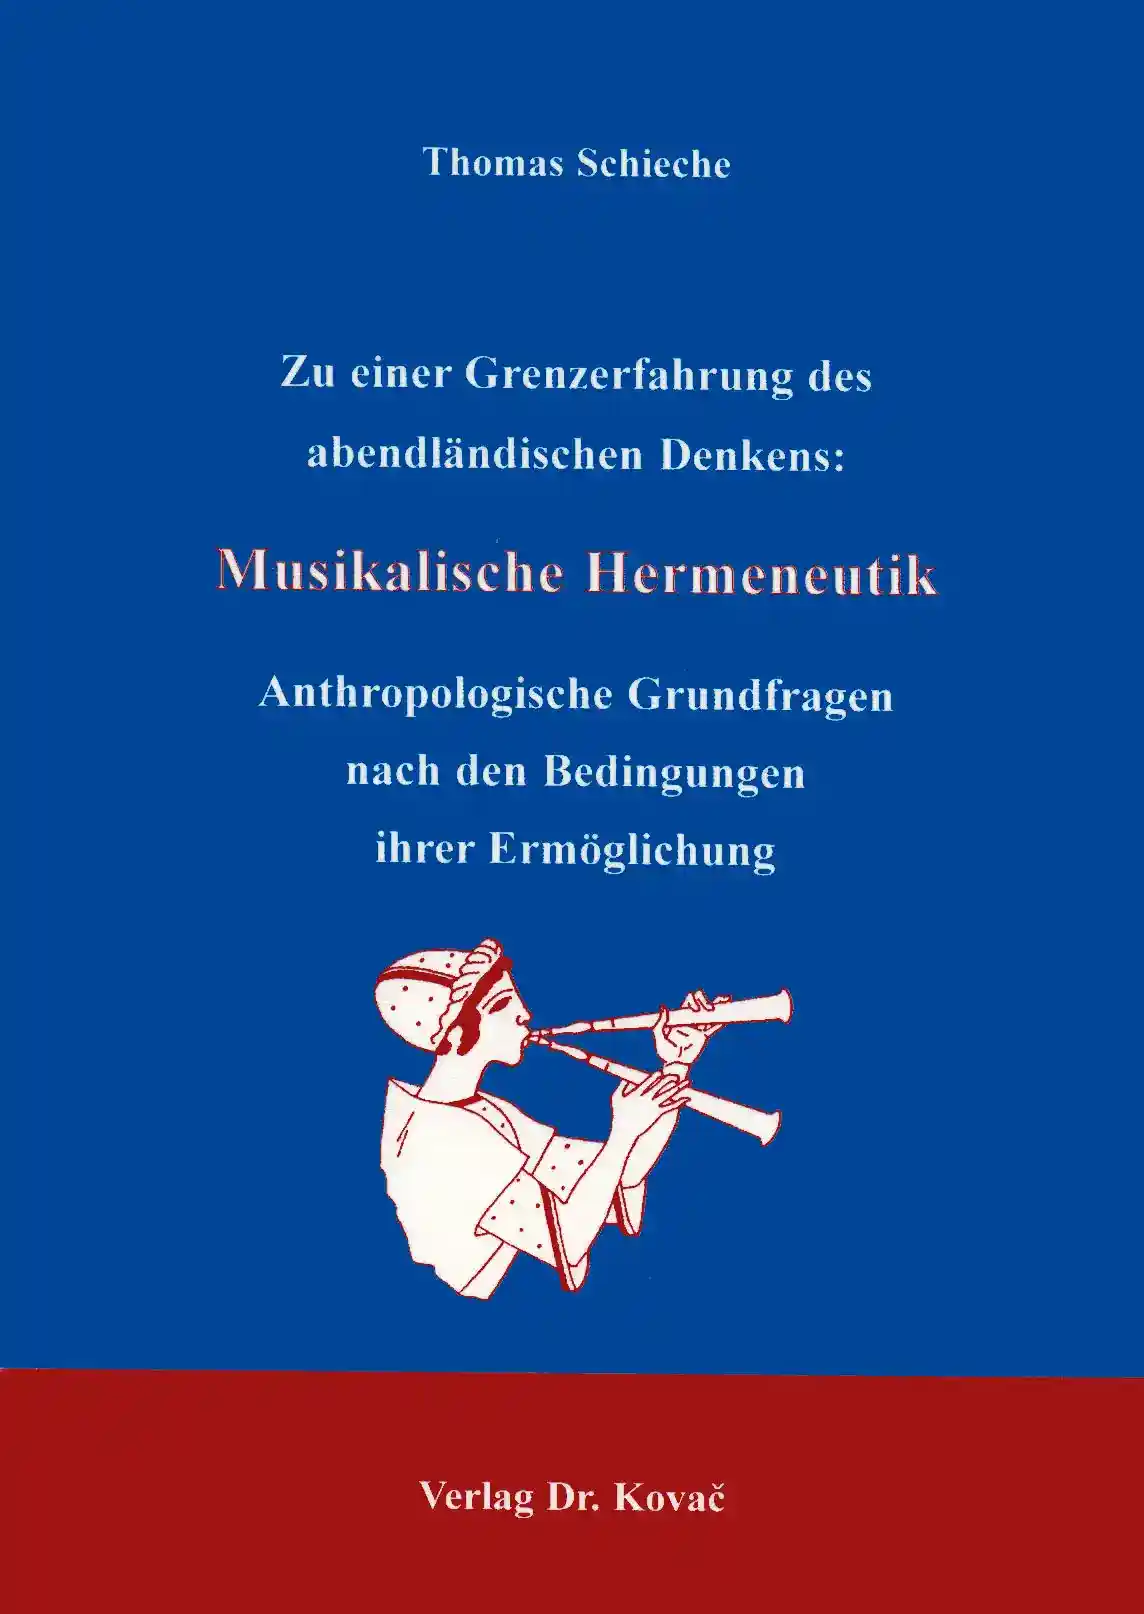  Dissertation: Musikalische Hermeneutik